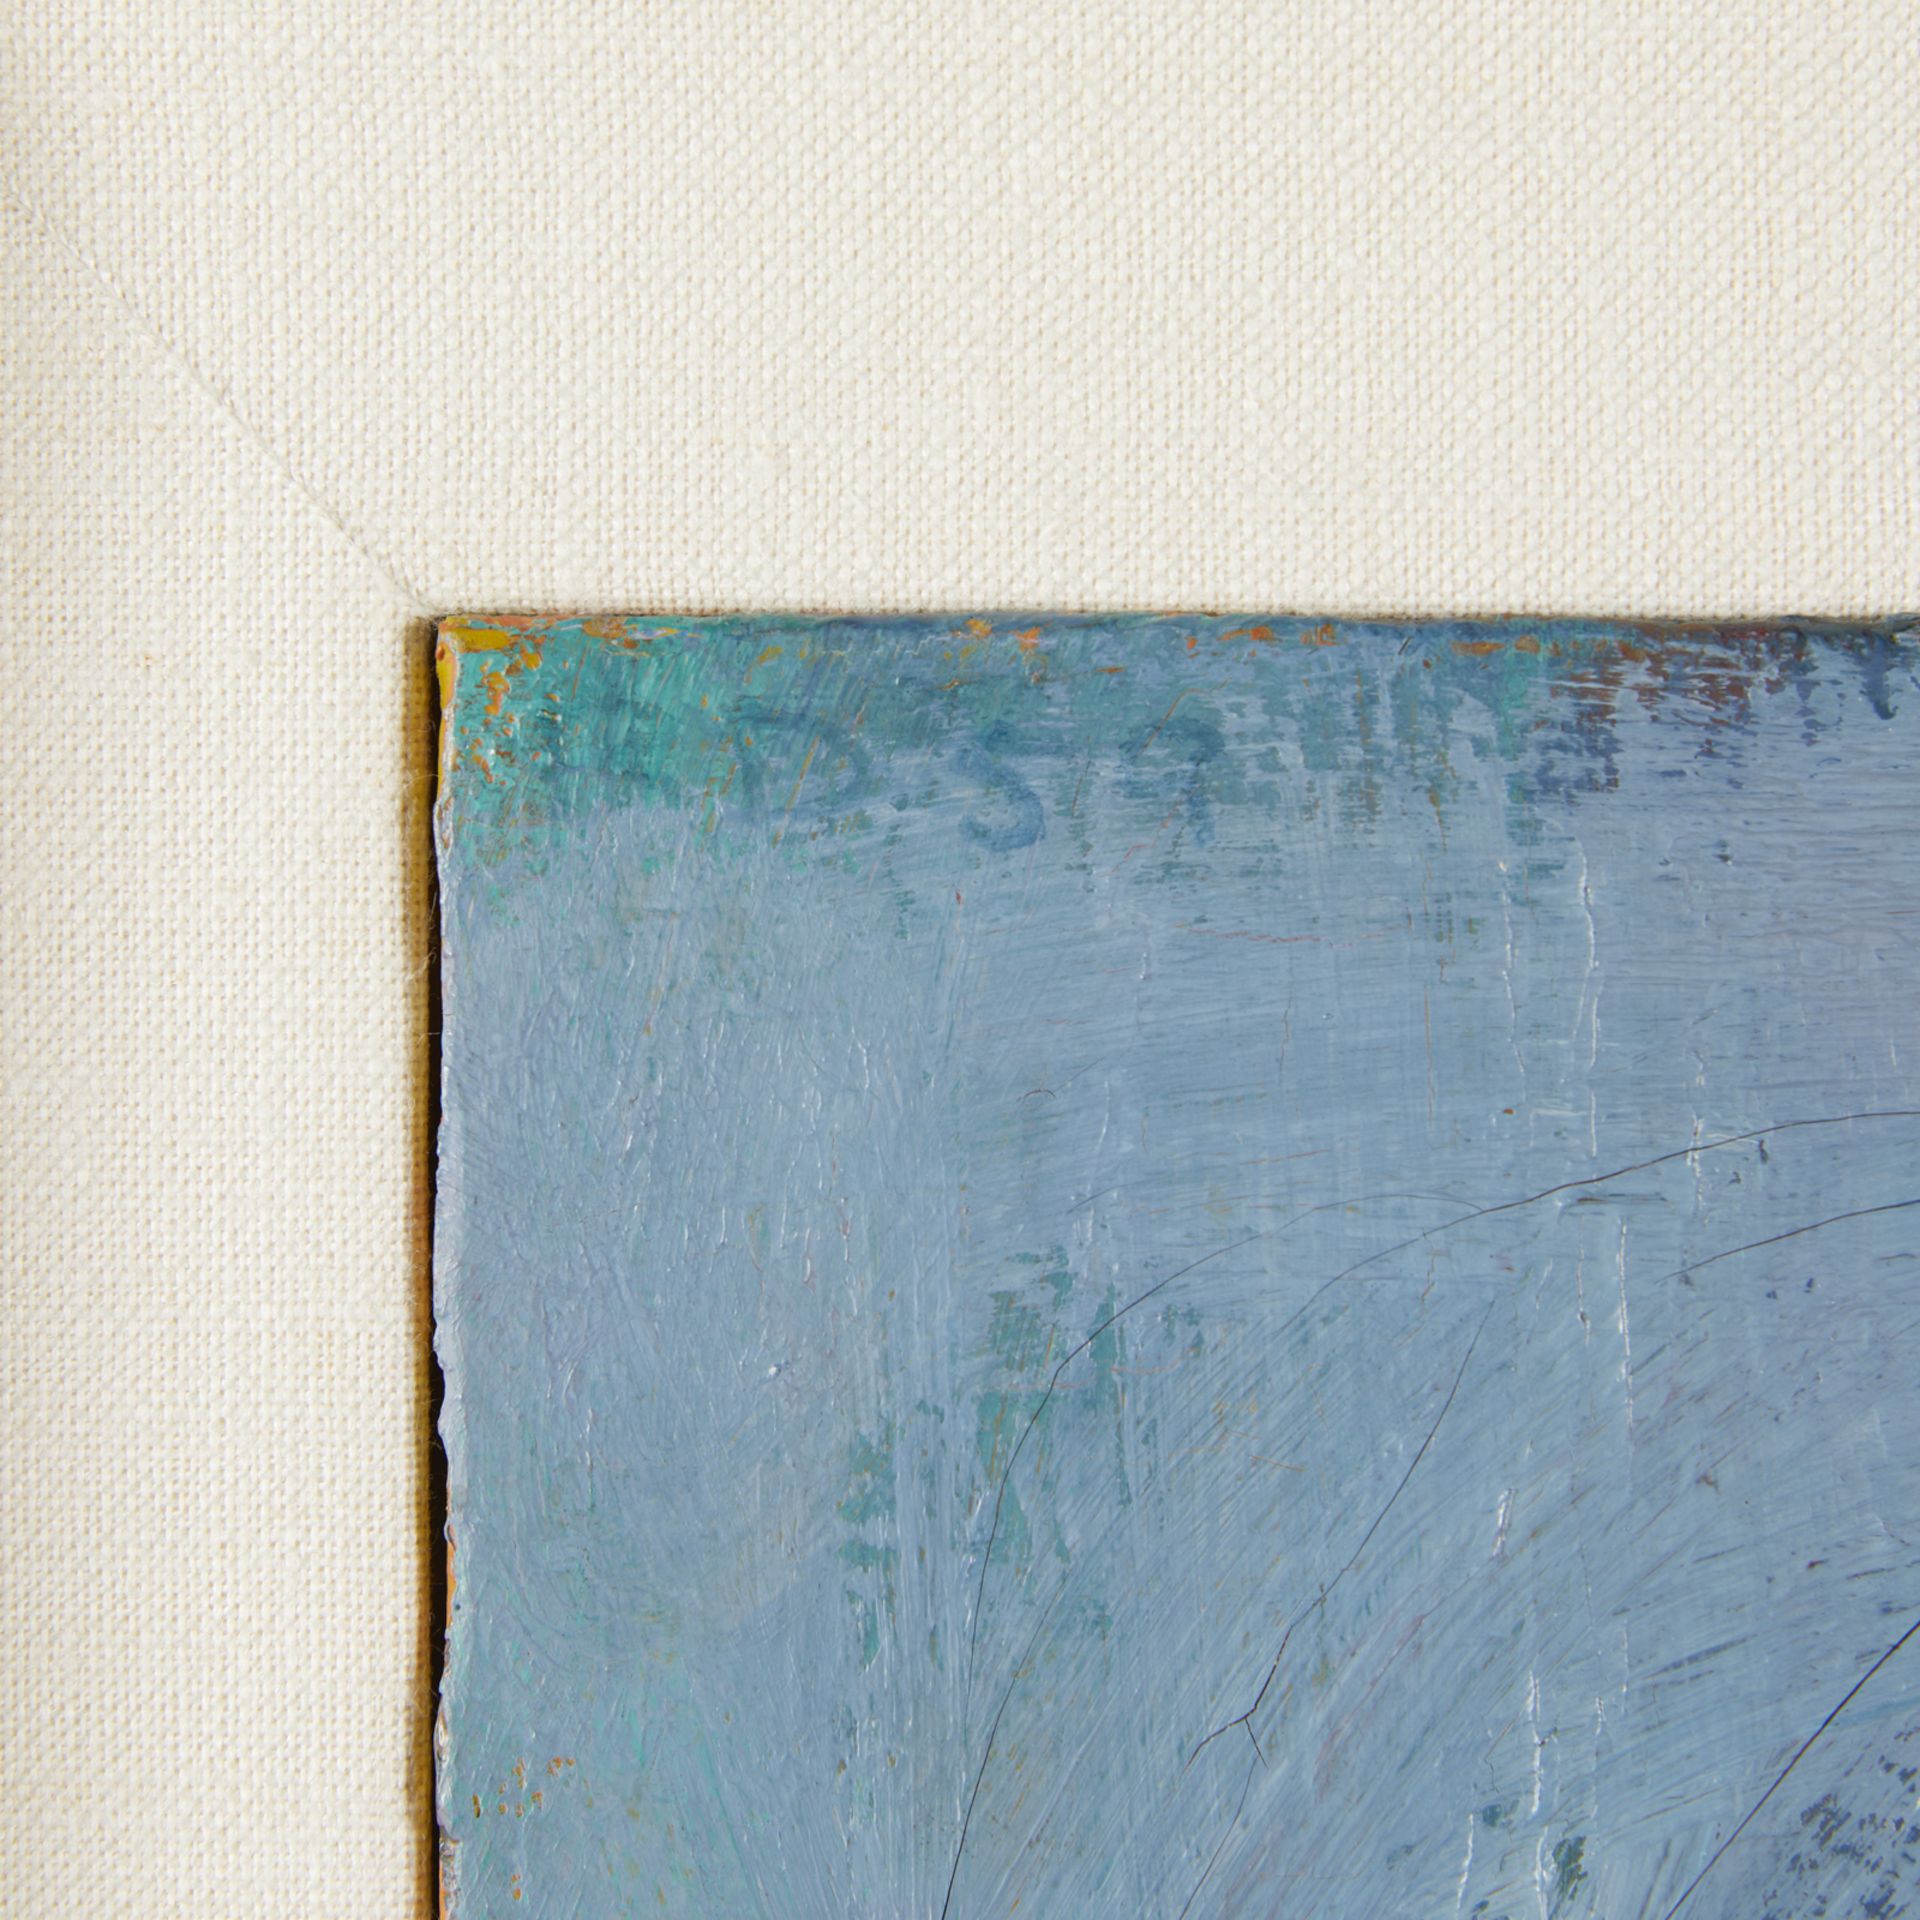 Richard Diebenkorn "Reclining Nude II" Painting - Image 2 of 13